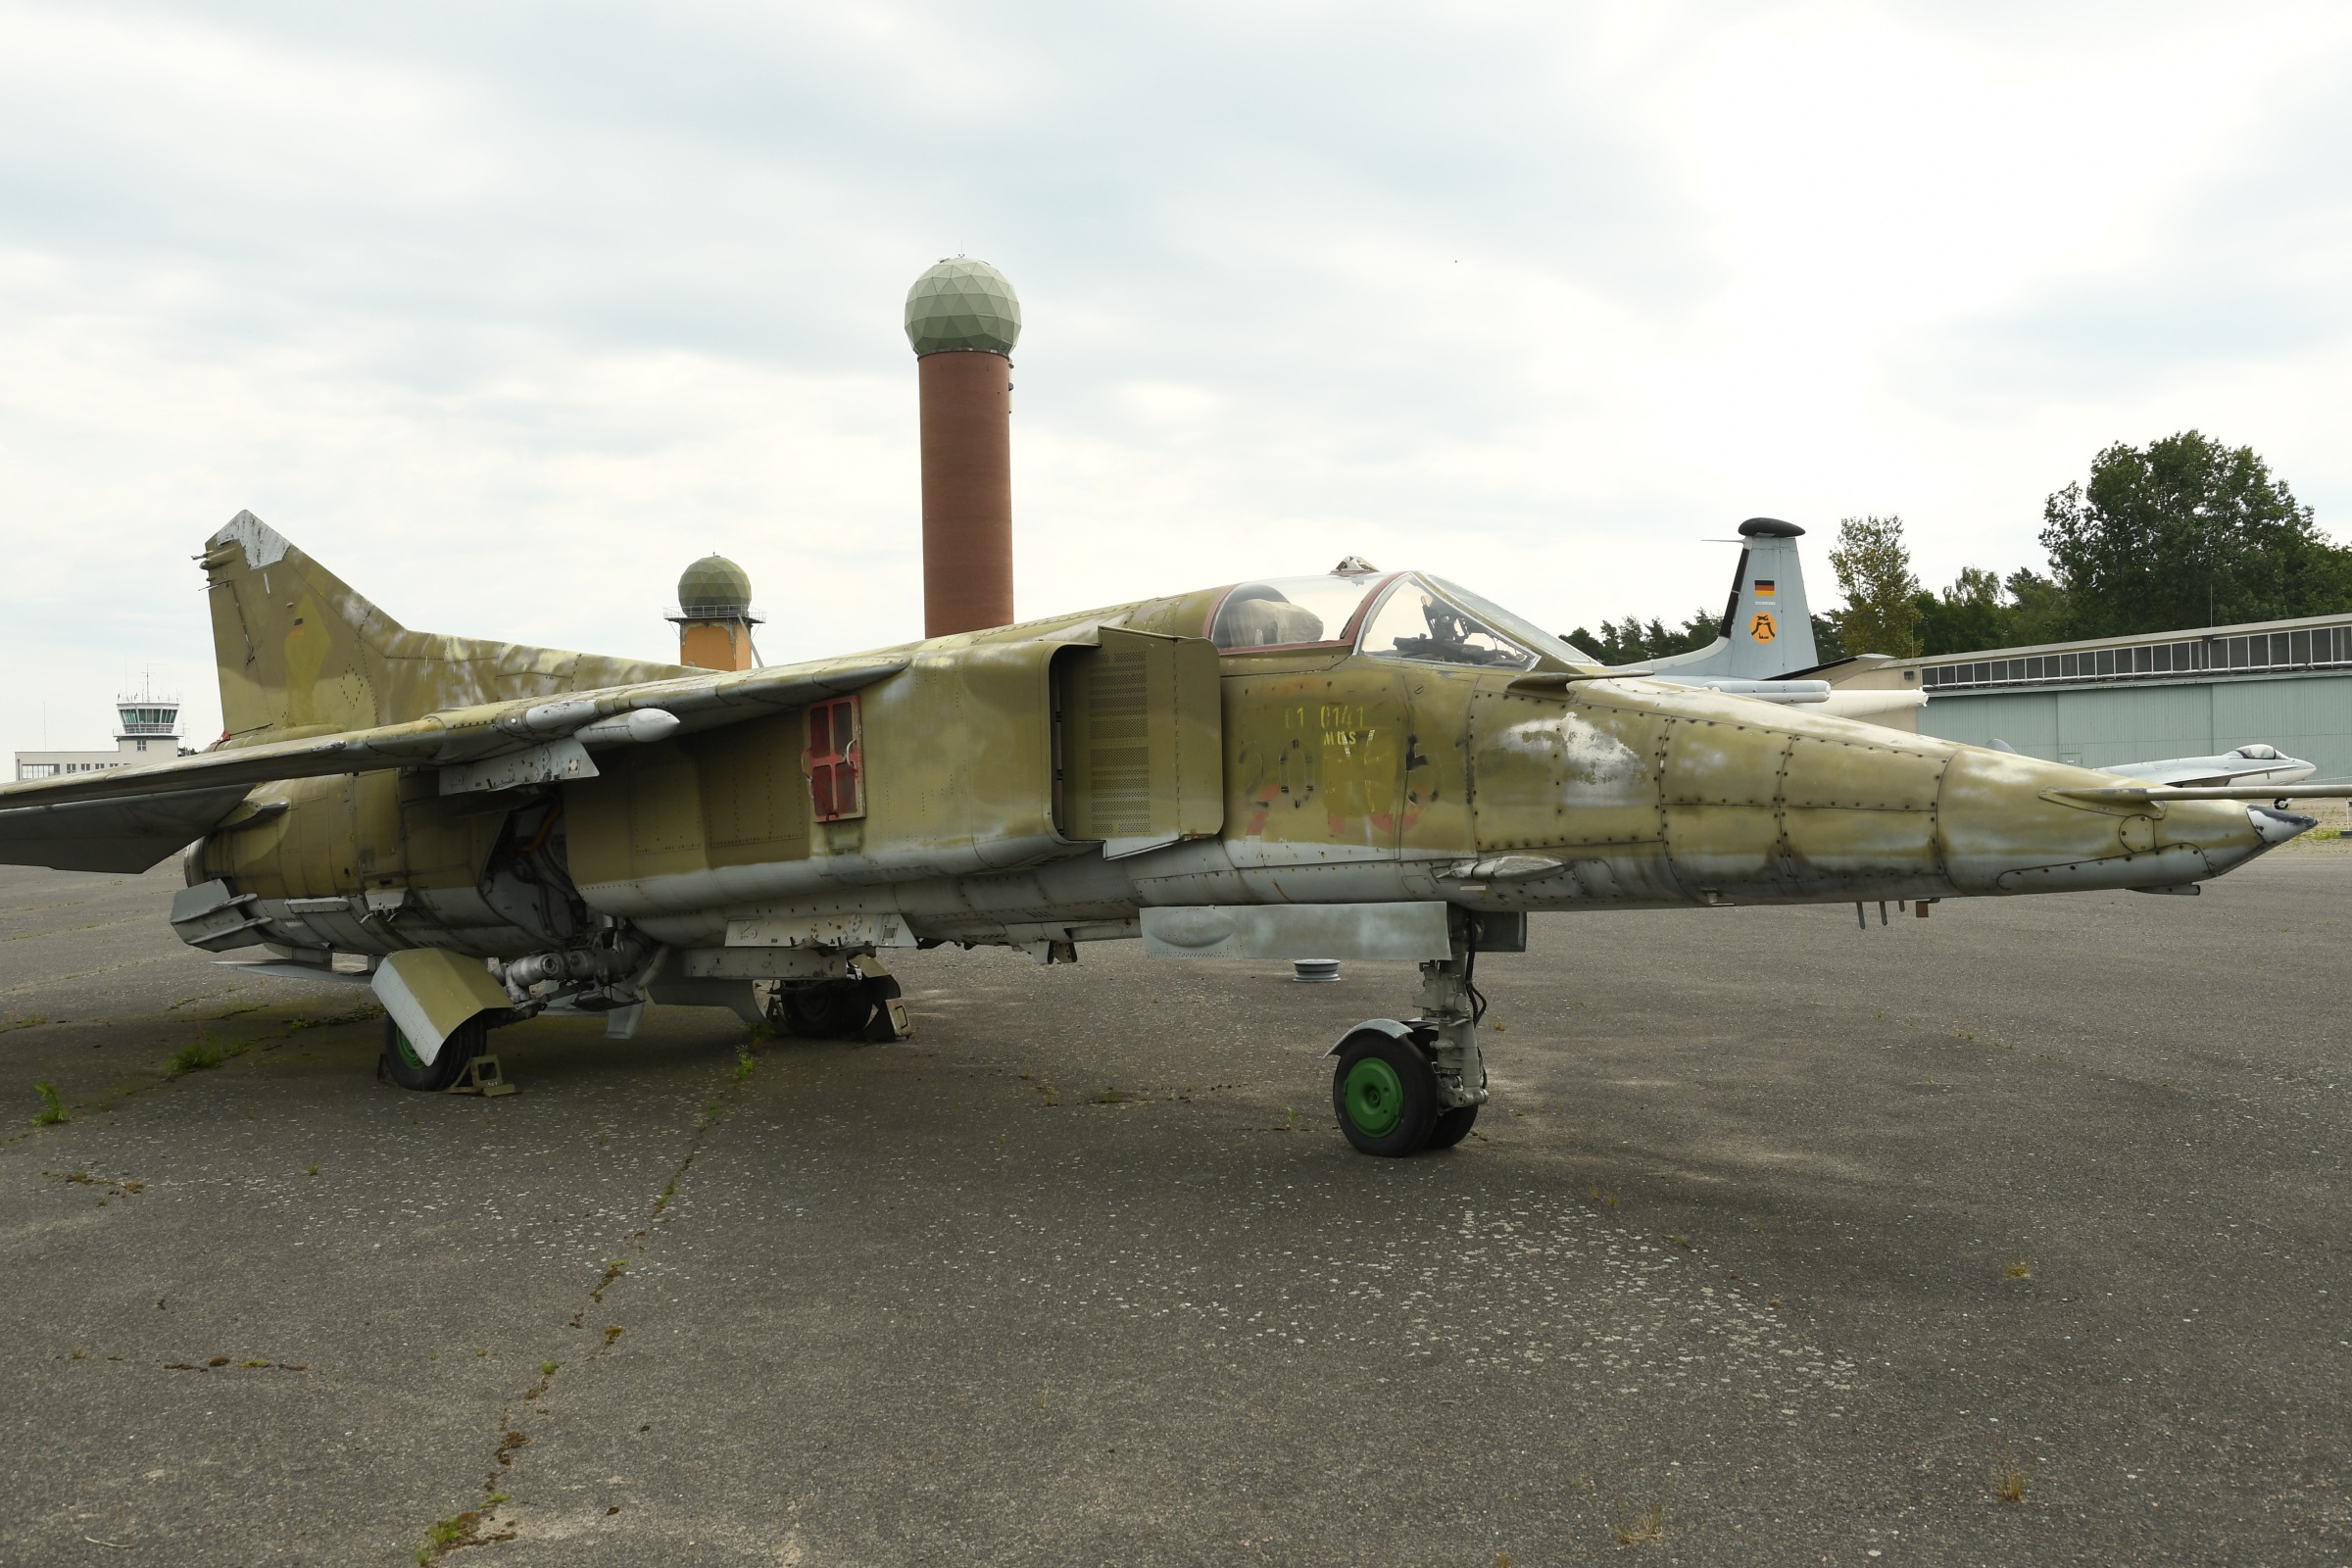 MiG-23BN  (Flogger-H)